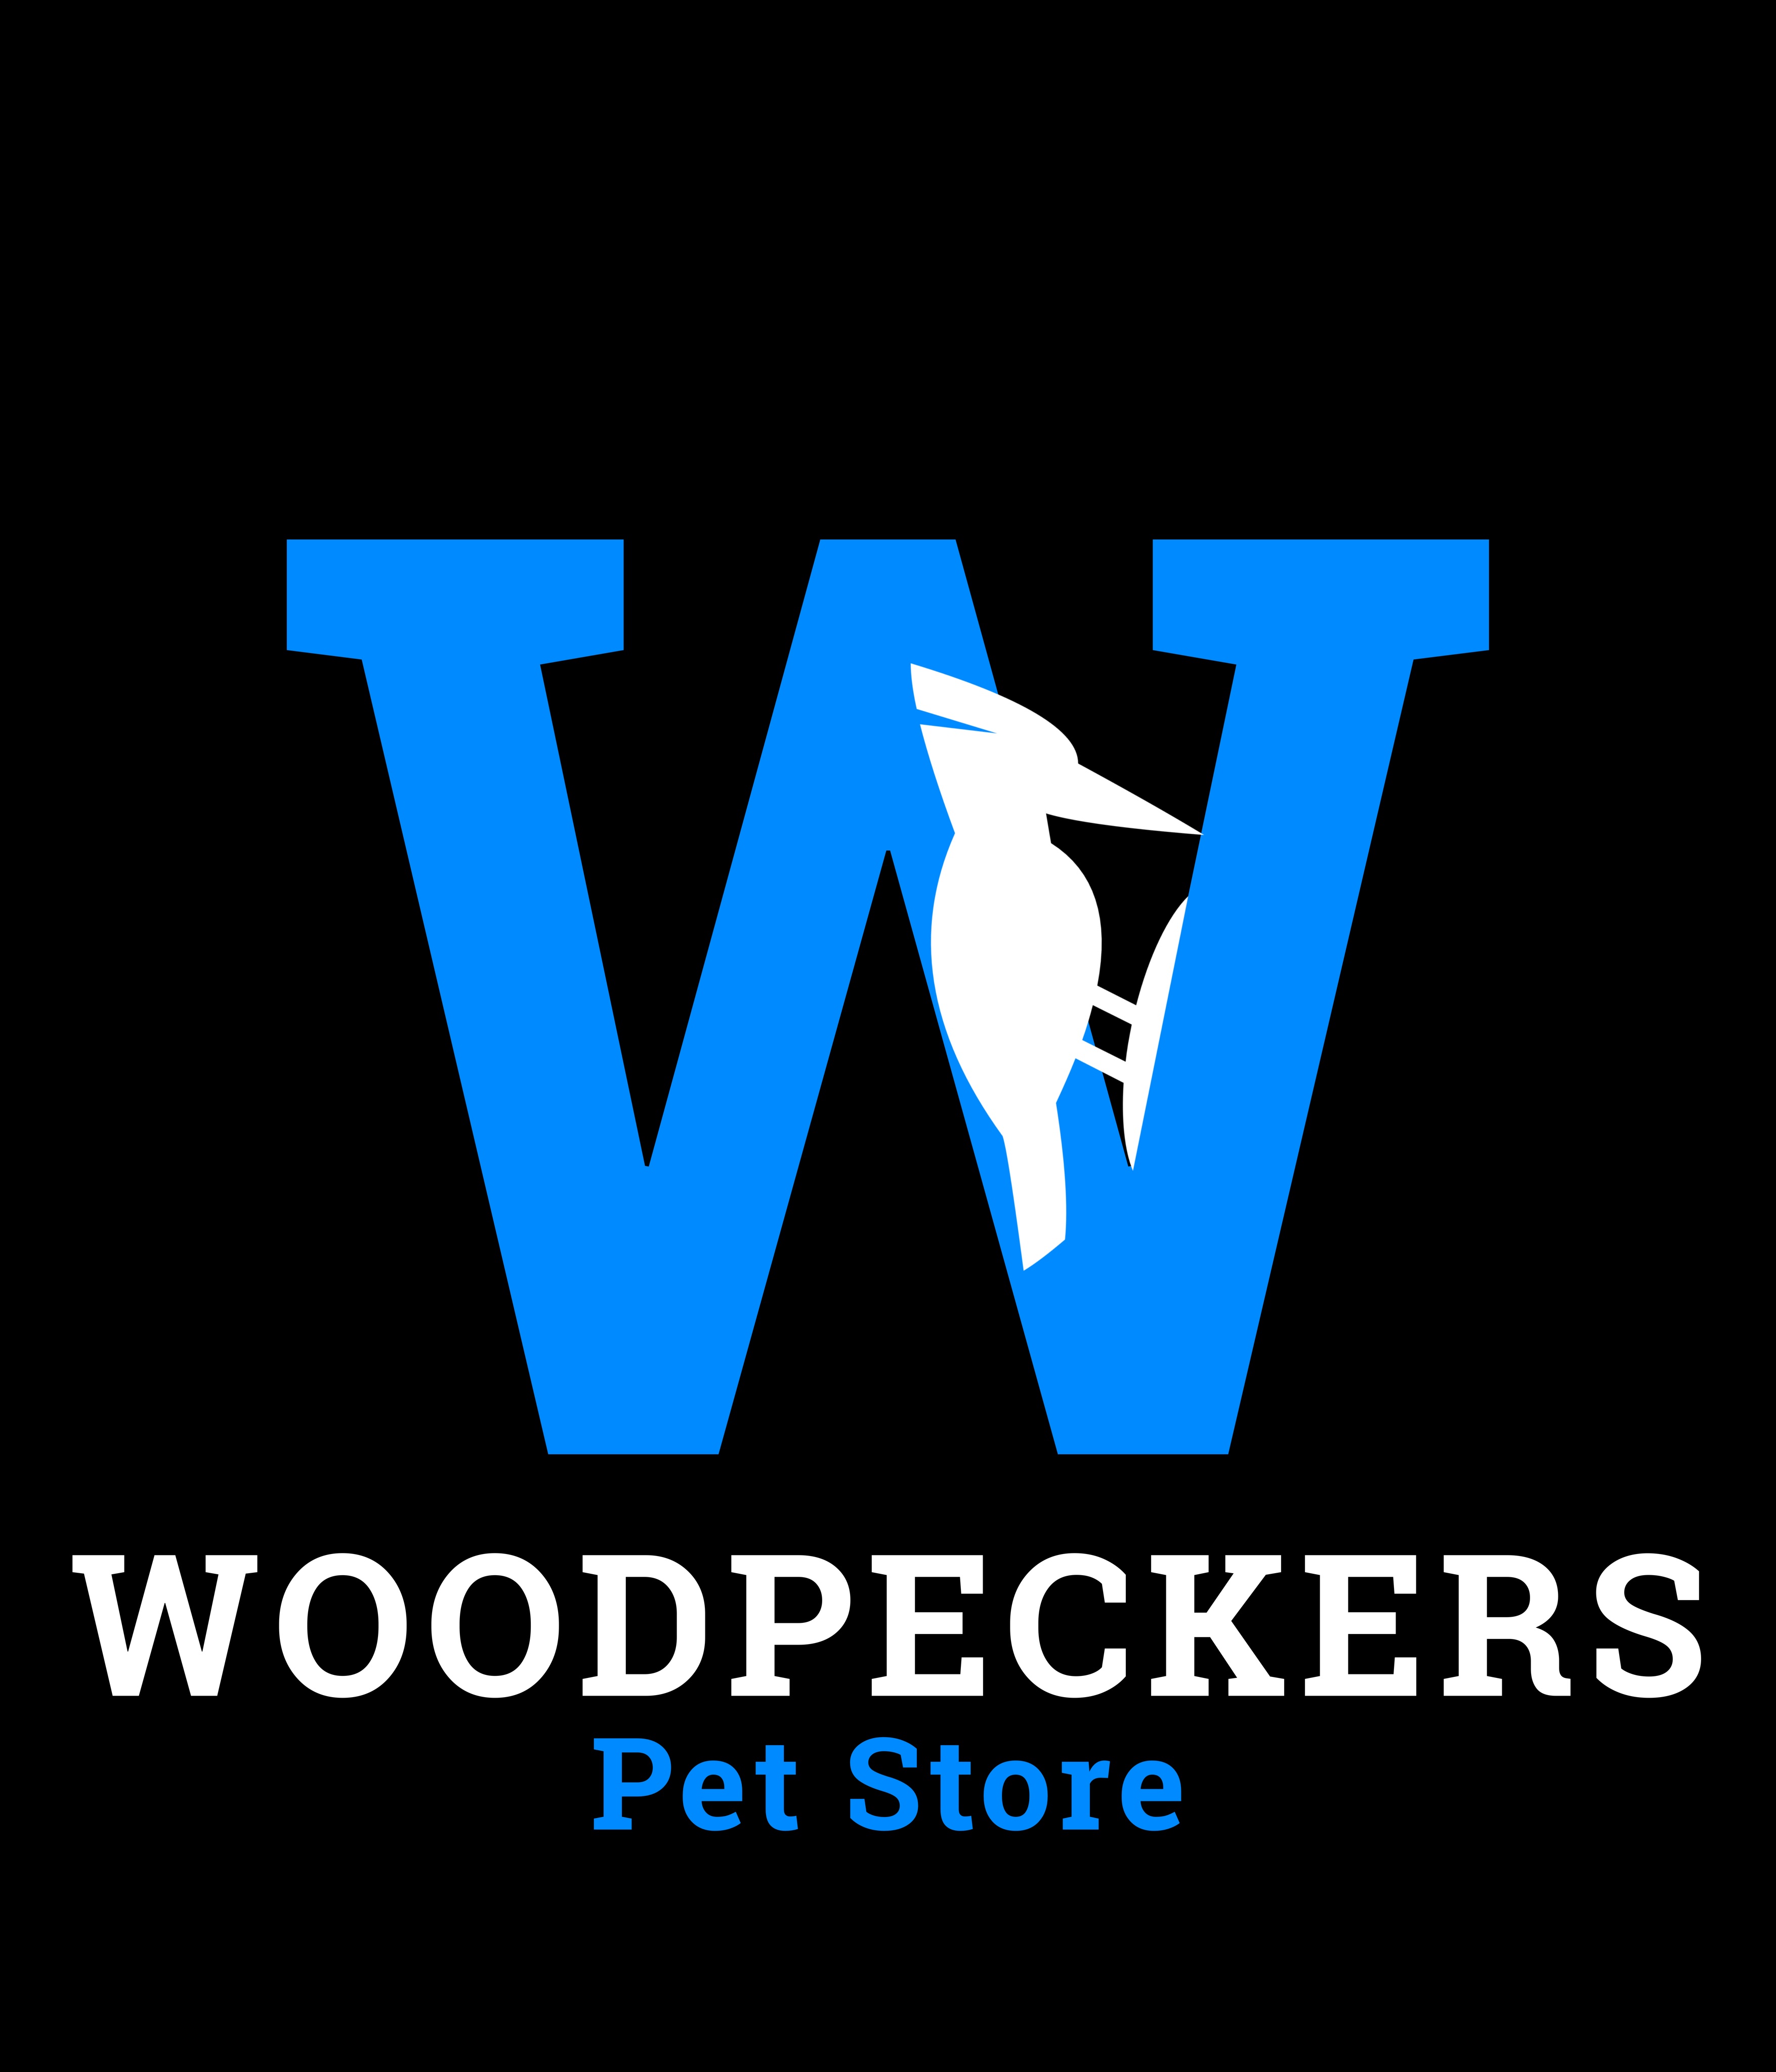 Woodpeckers Pet Store